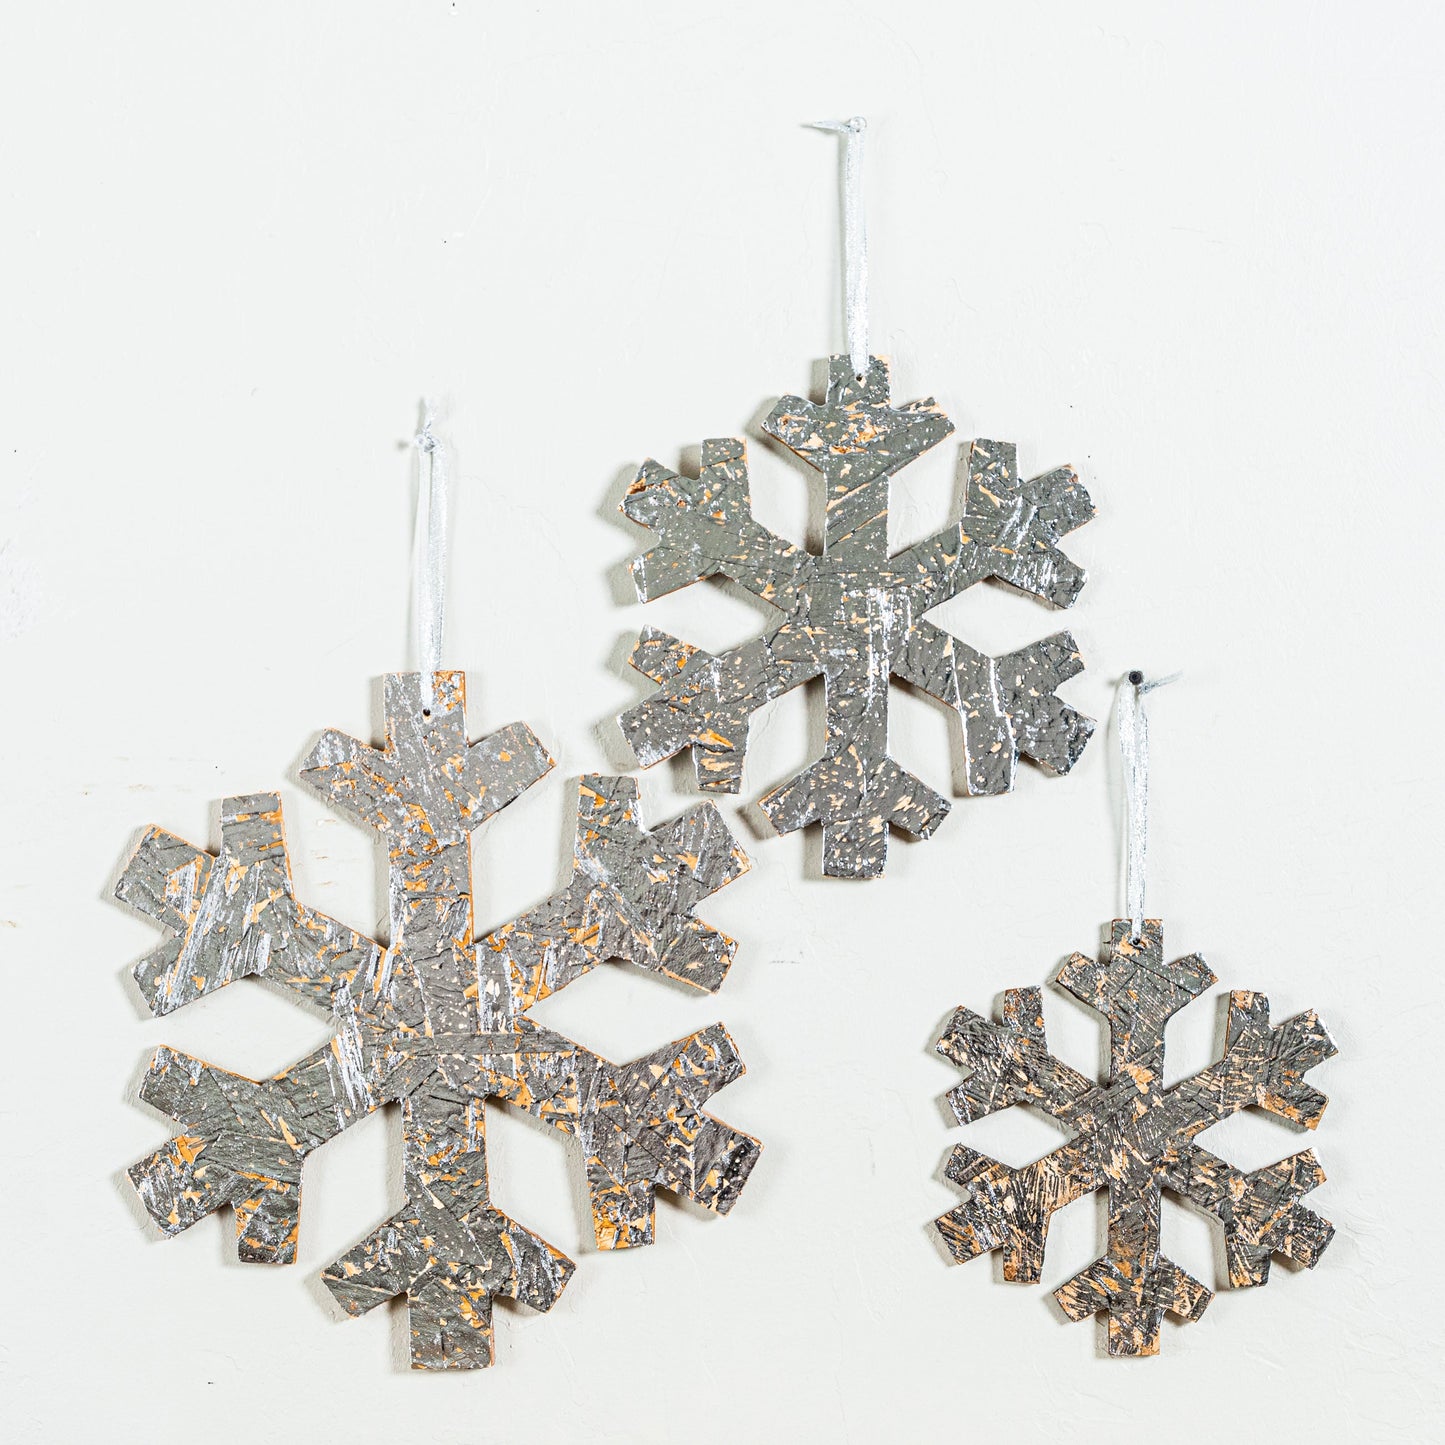 Rustic Silver Snowflake Ornament, Medium